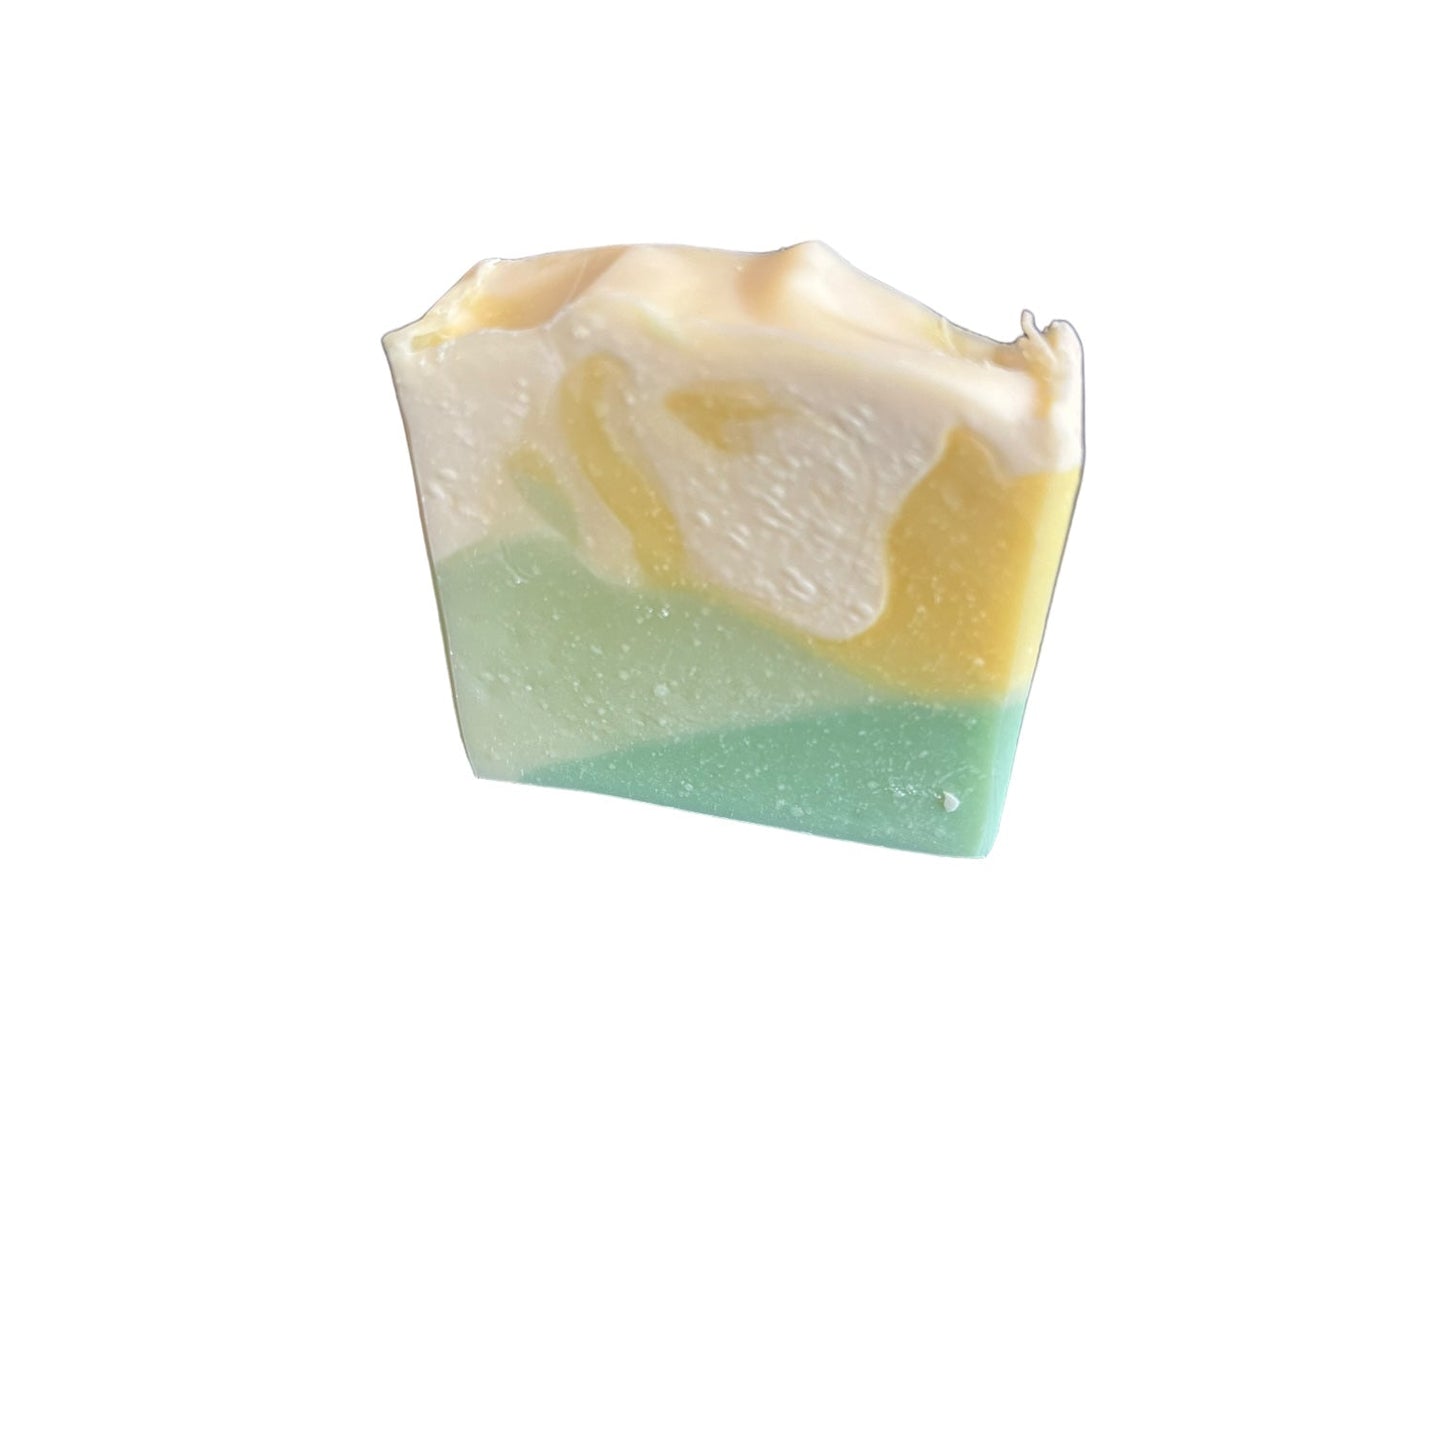 Lemon + Mint Soap Bar - Organically Bath & Beauty